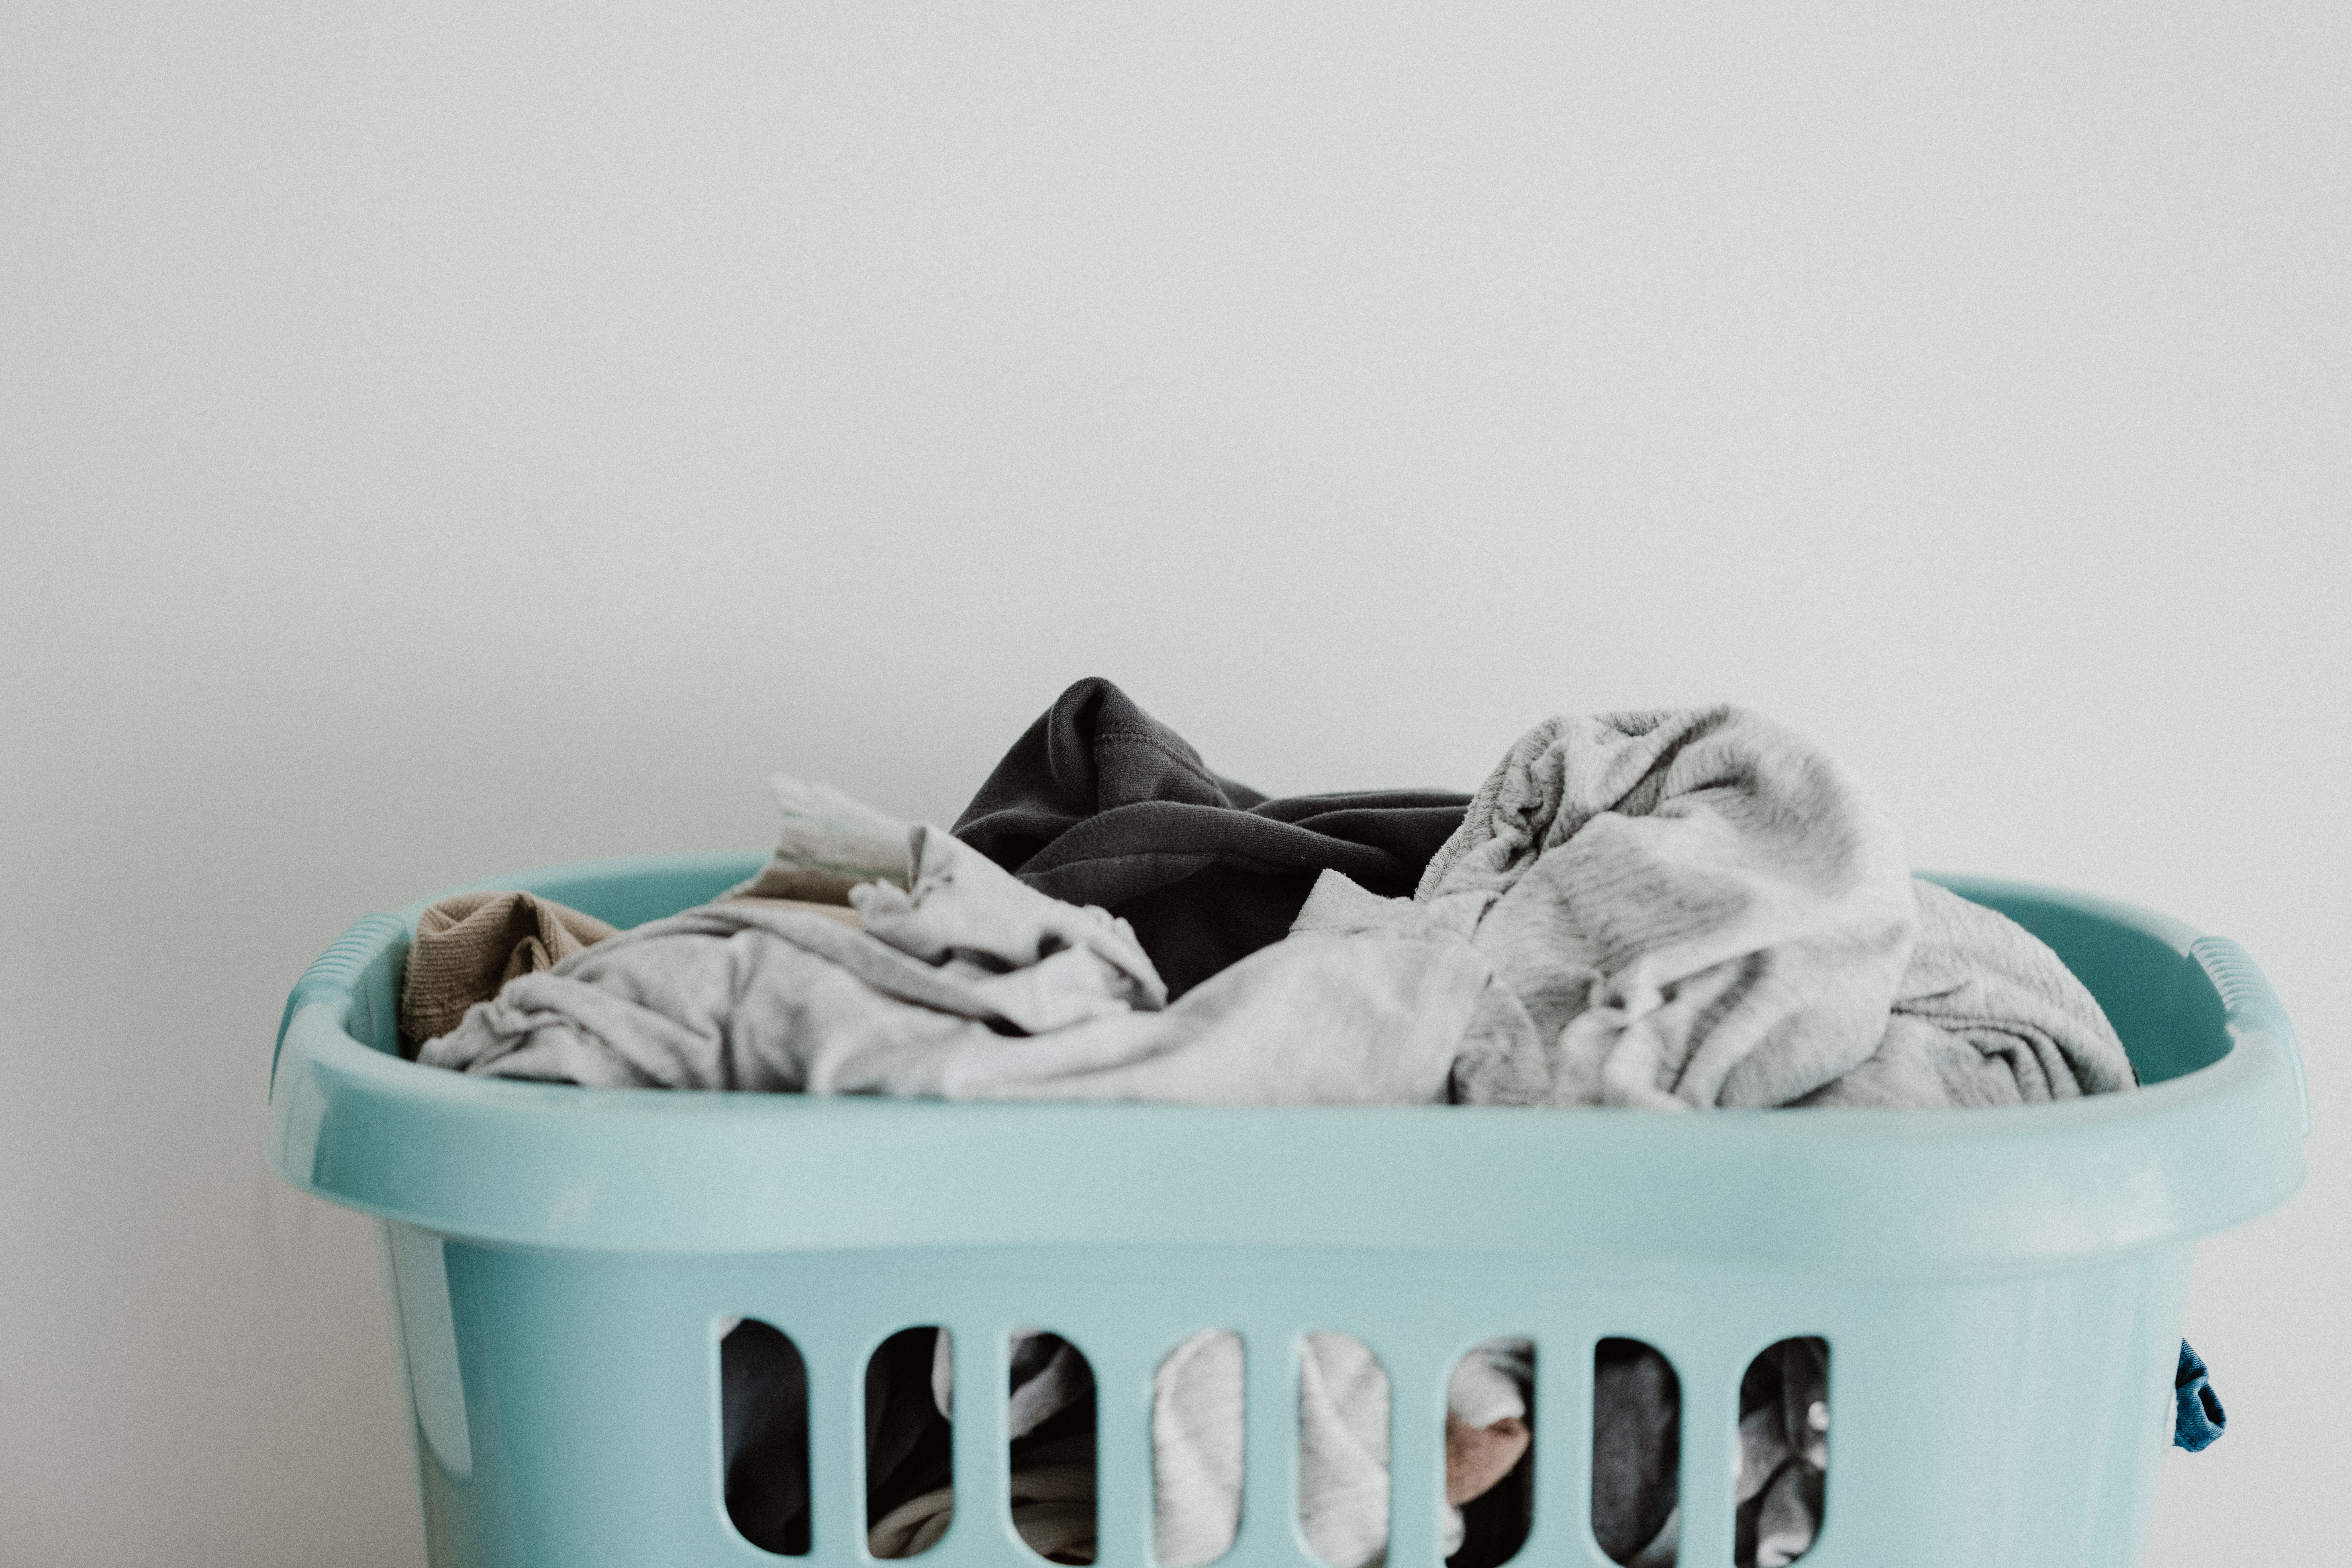 Xeros study explores upcycling of laundry microfibres